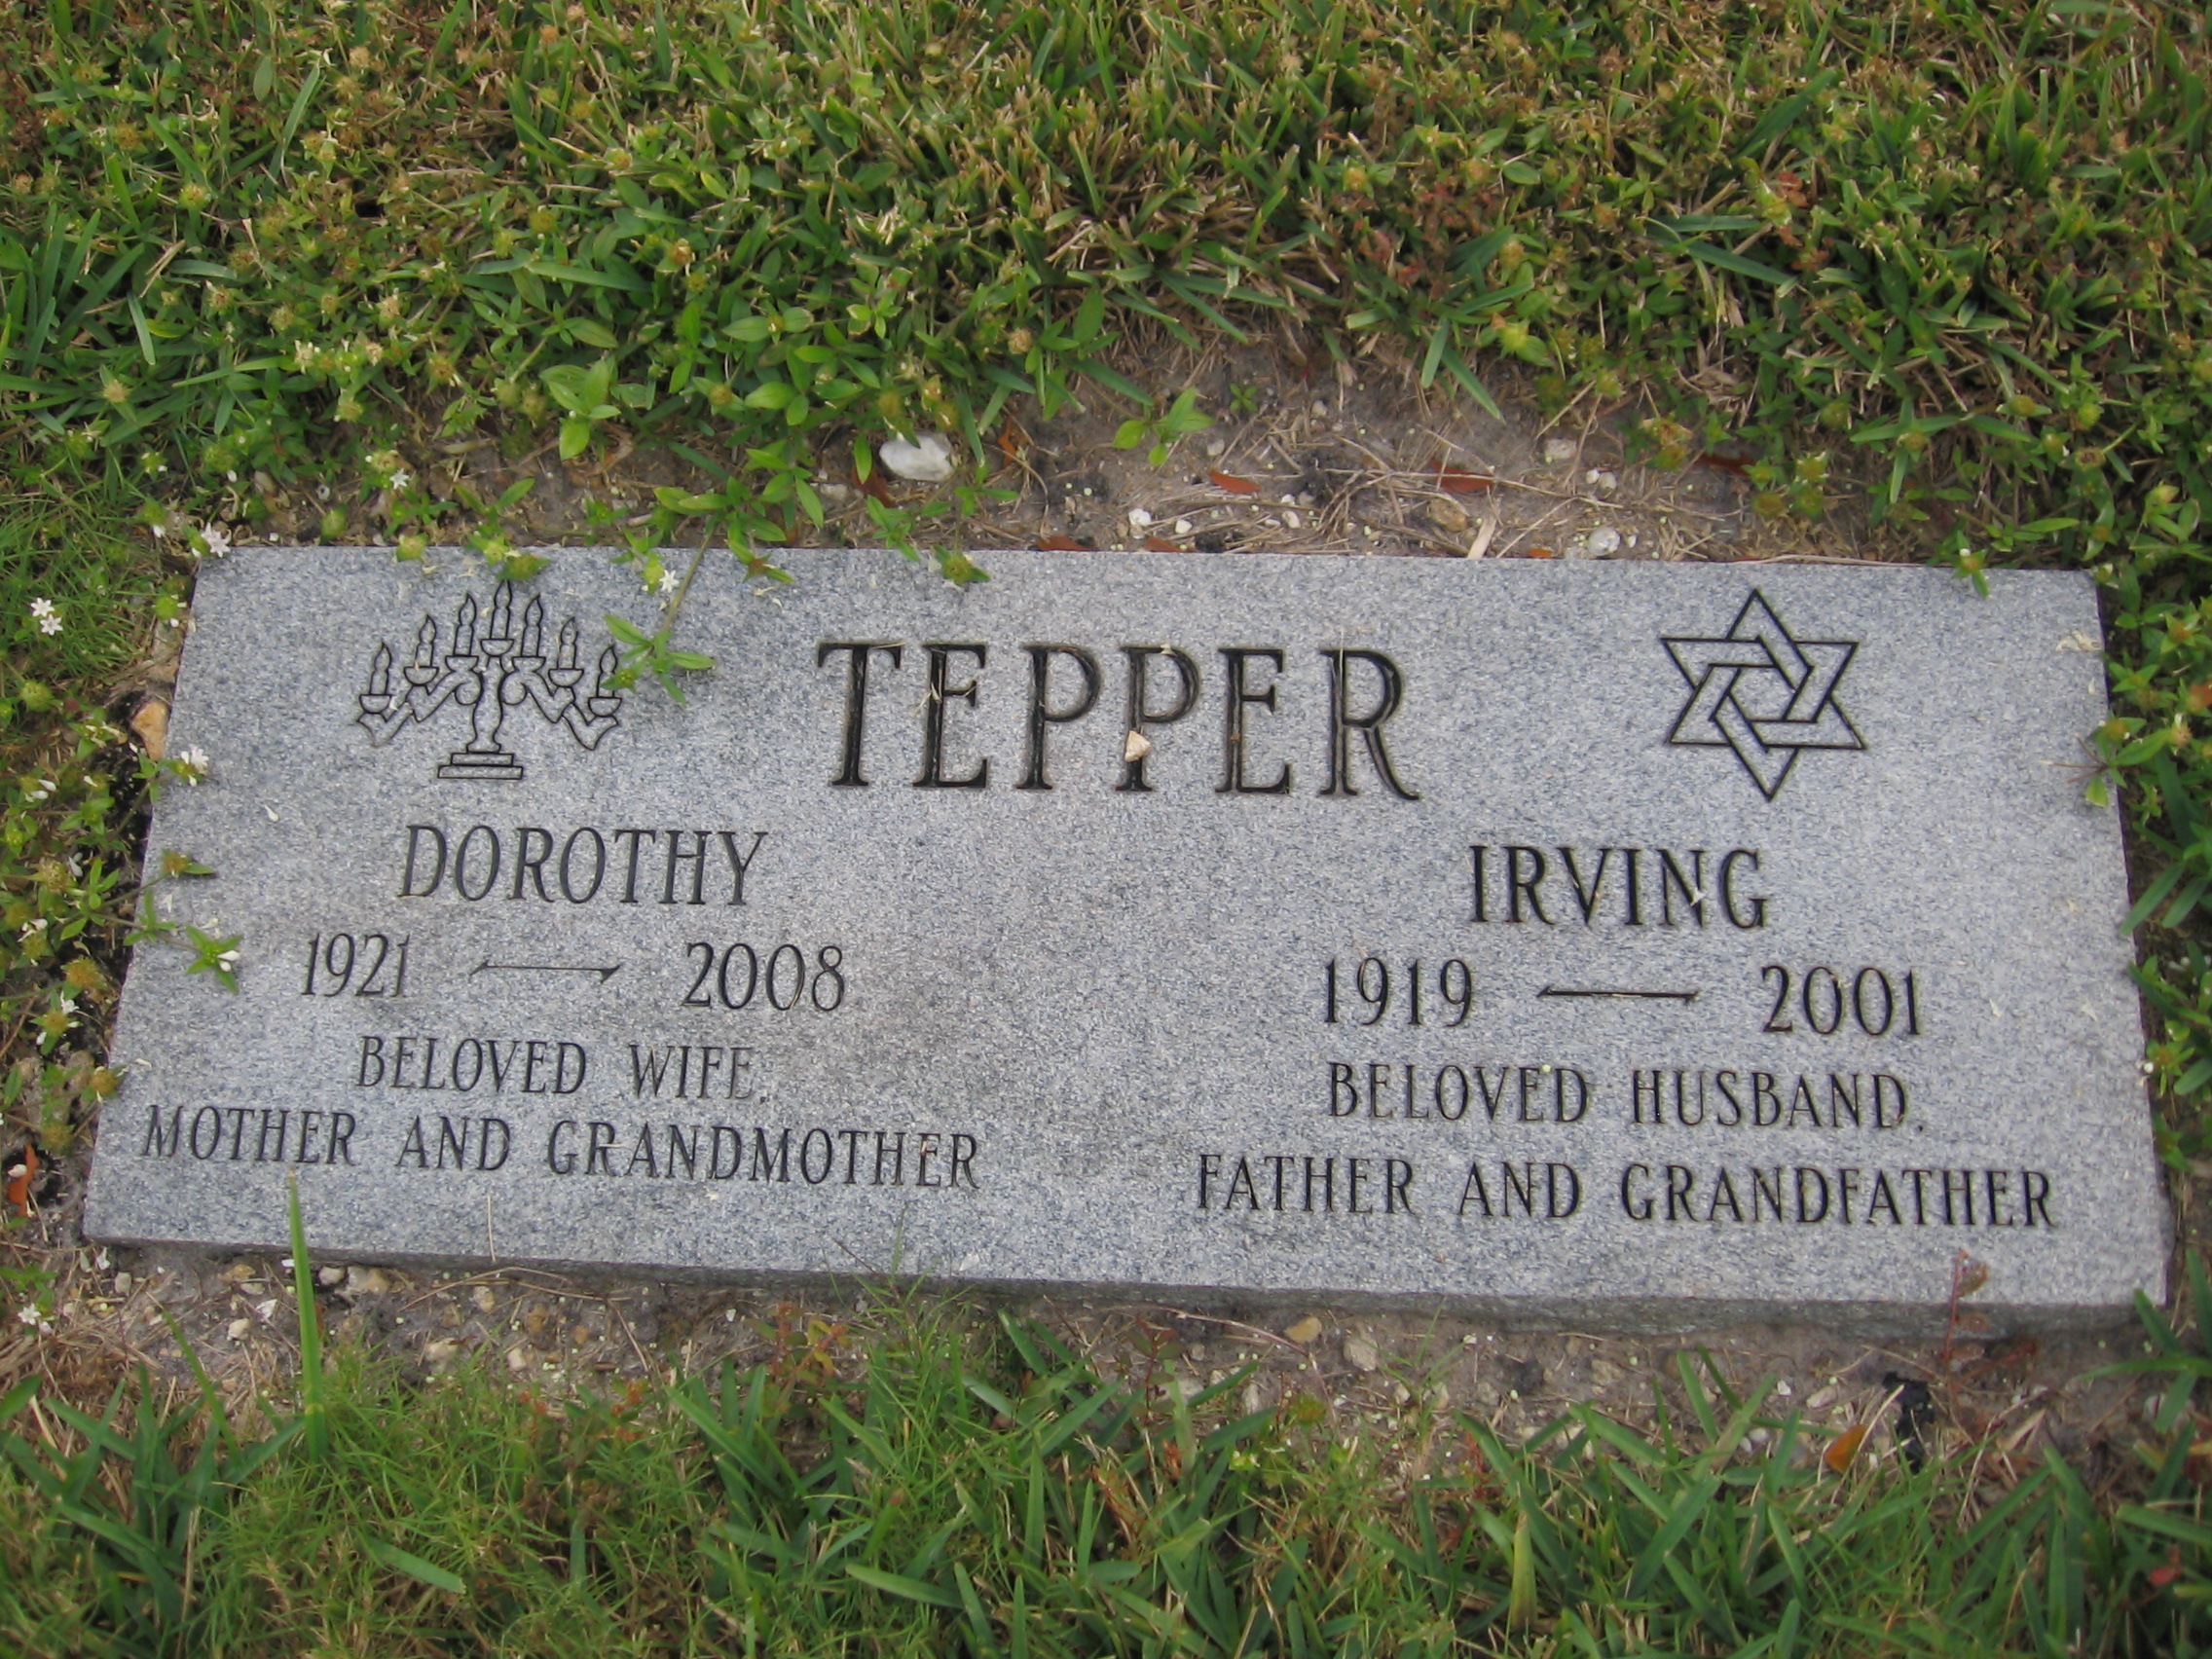 Irving Tepper